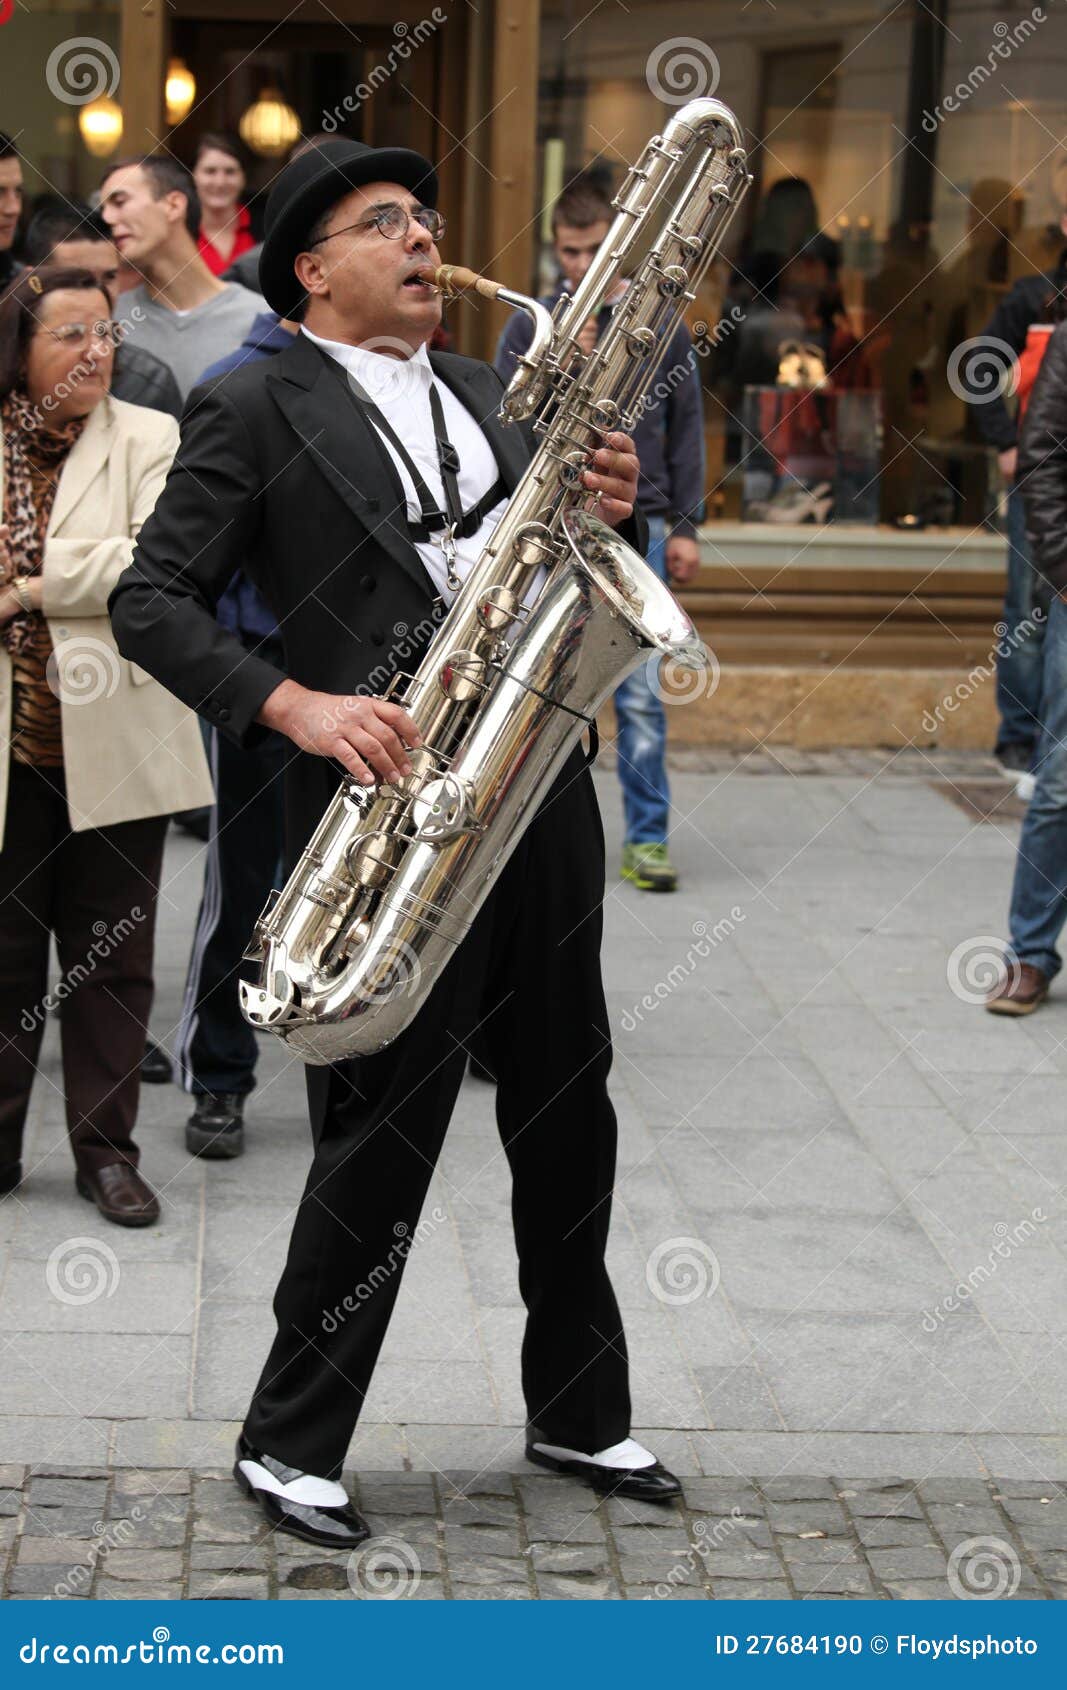 Мистер саксофон. Большой саксофон. Баритон саксофонист. Саксофон баритон с человеком. Музыкант играющий на баритоне.